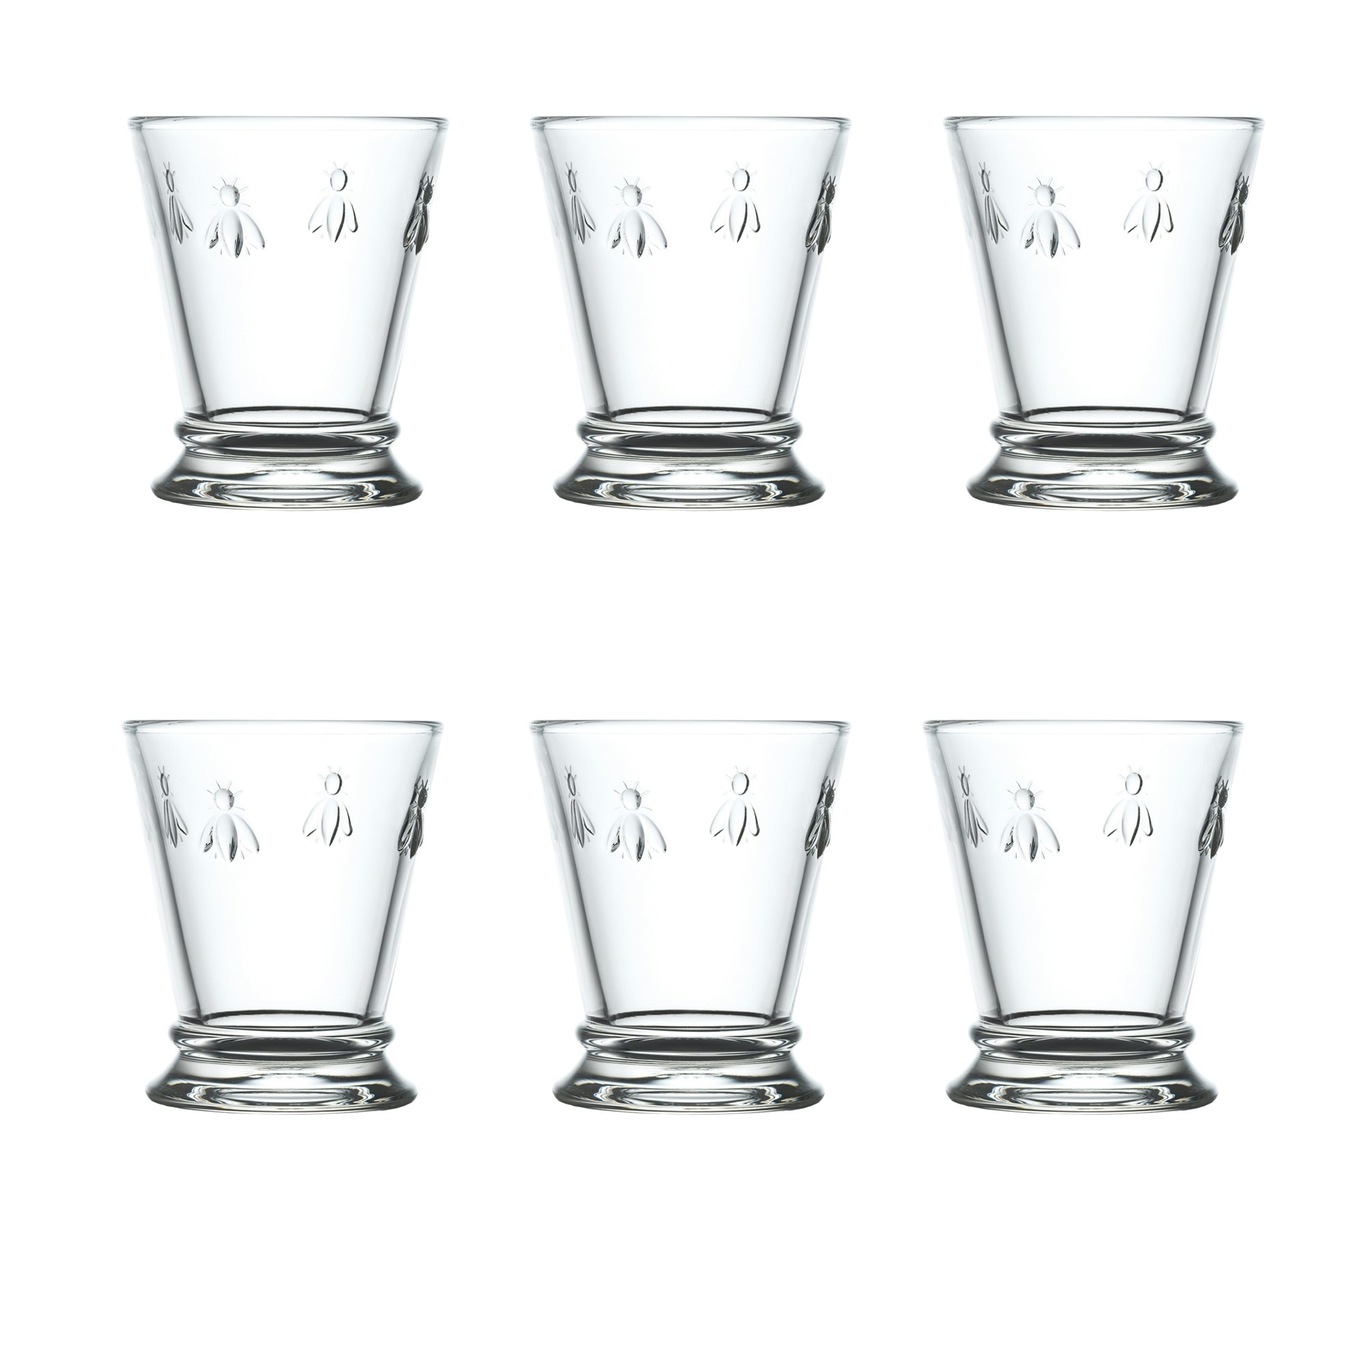 https://royaldesign.com/image/2/la-rochere-abeille-drinking-glass-185-cl-6-pack-0?w=800&quality=80